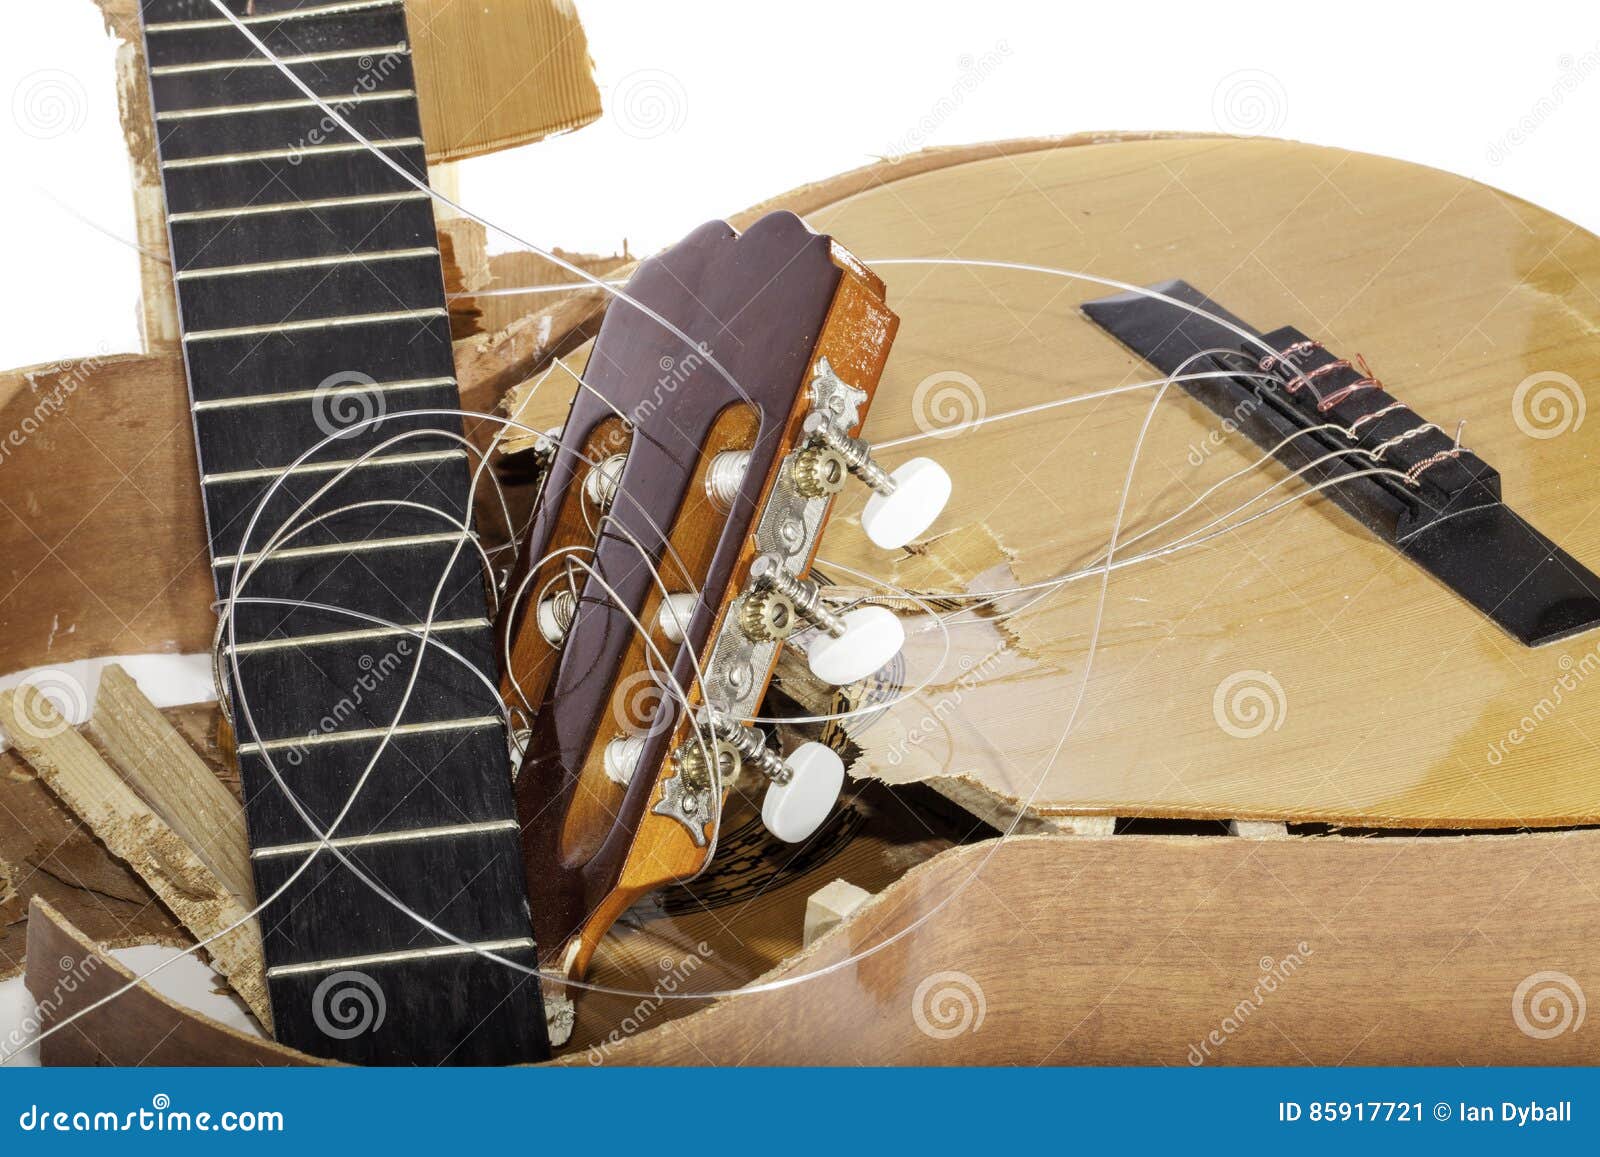 Converger cilindro fertilizante Guitarra rota en pedazos imagen de archivo. Imagen de aplastar - 85917721